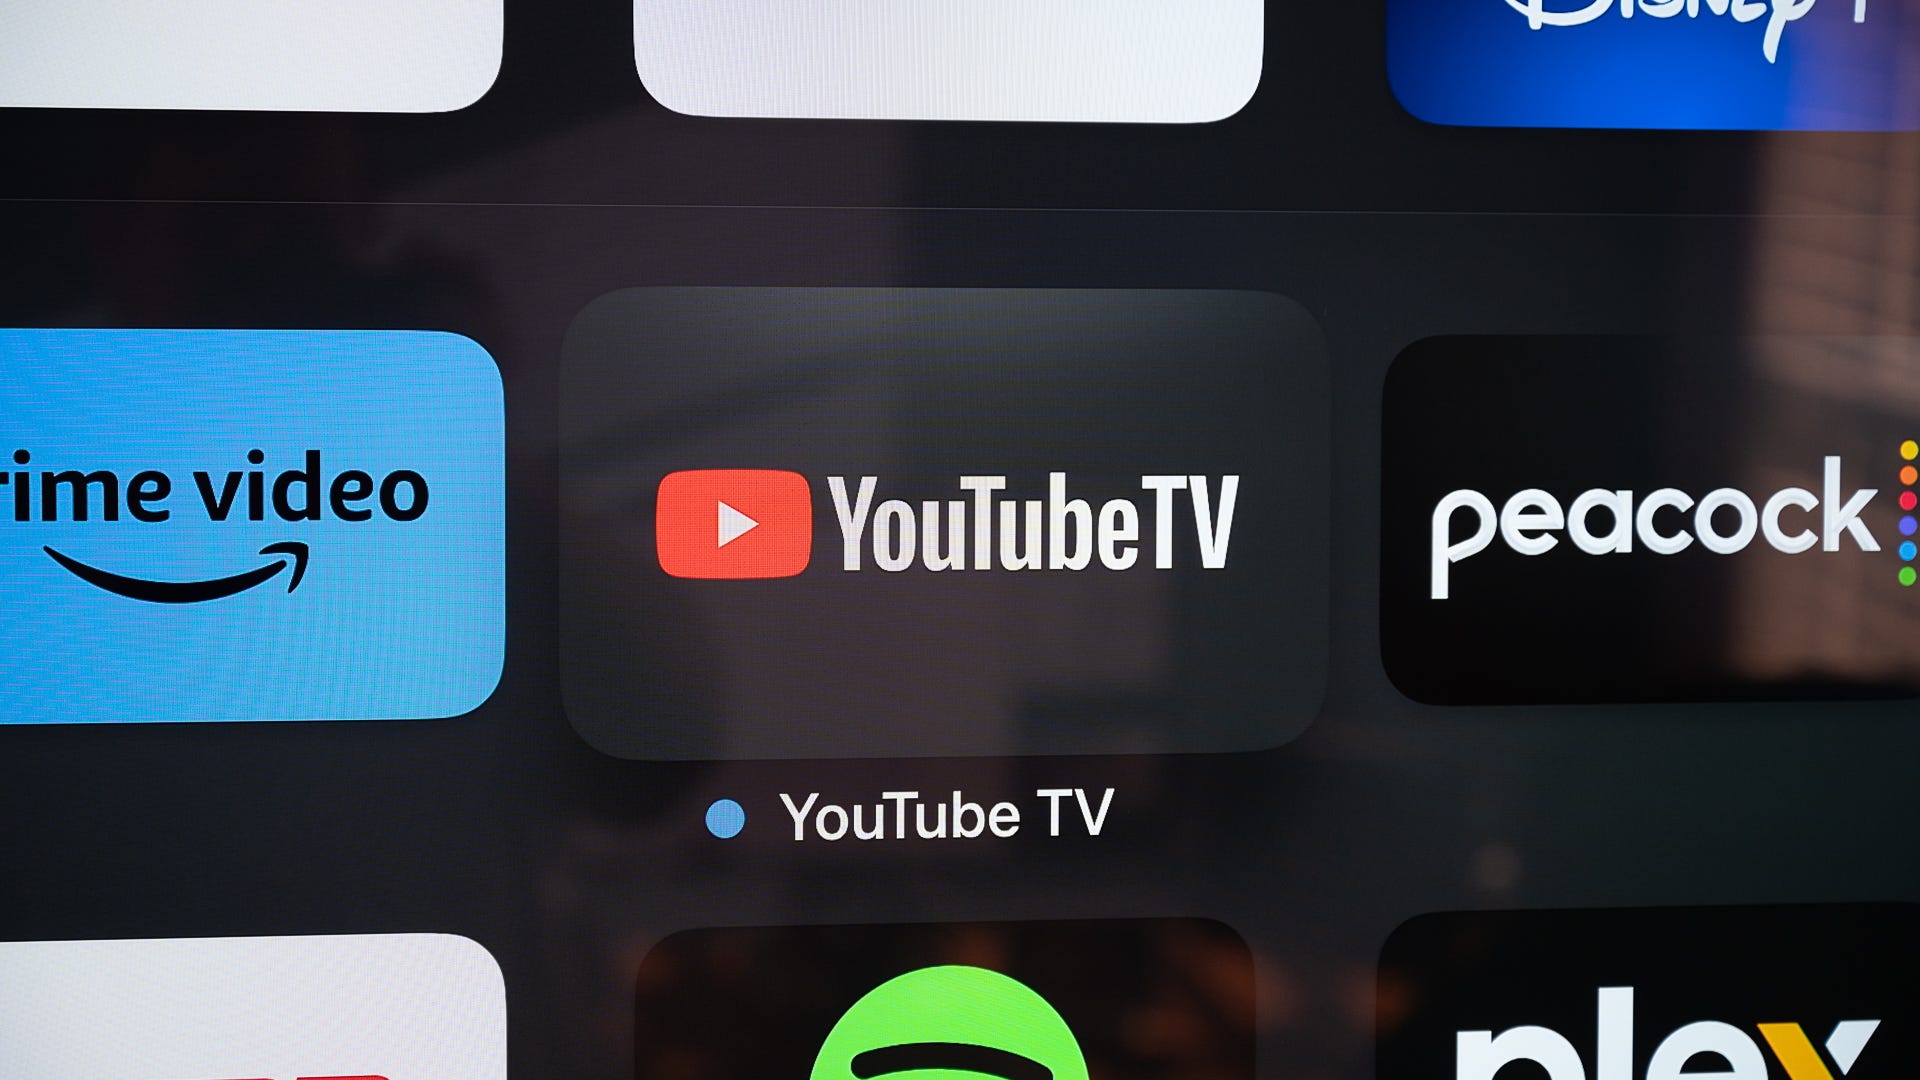 YouTube TV app icon on an Apple TV